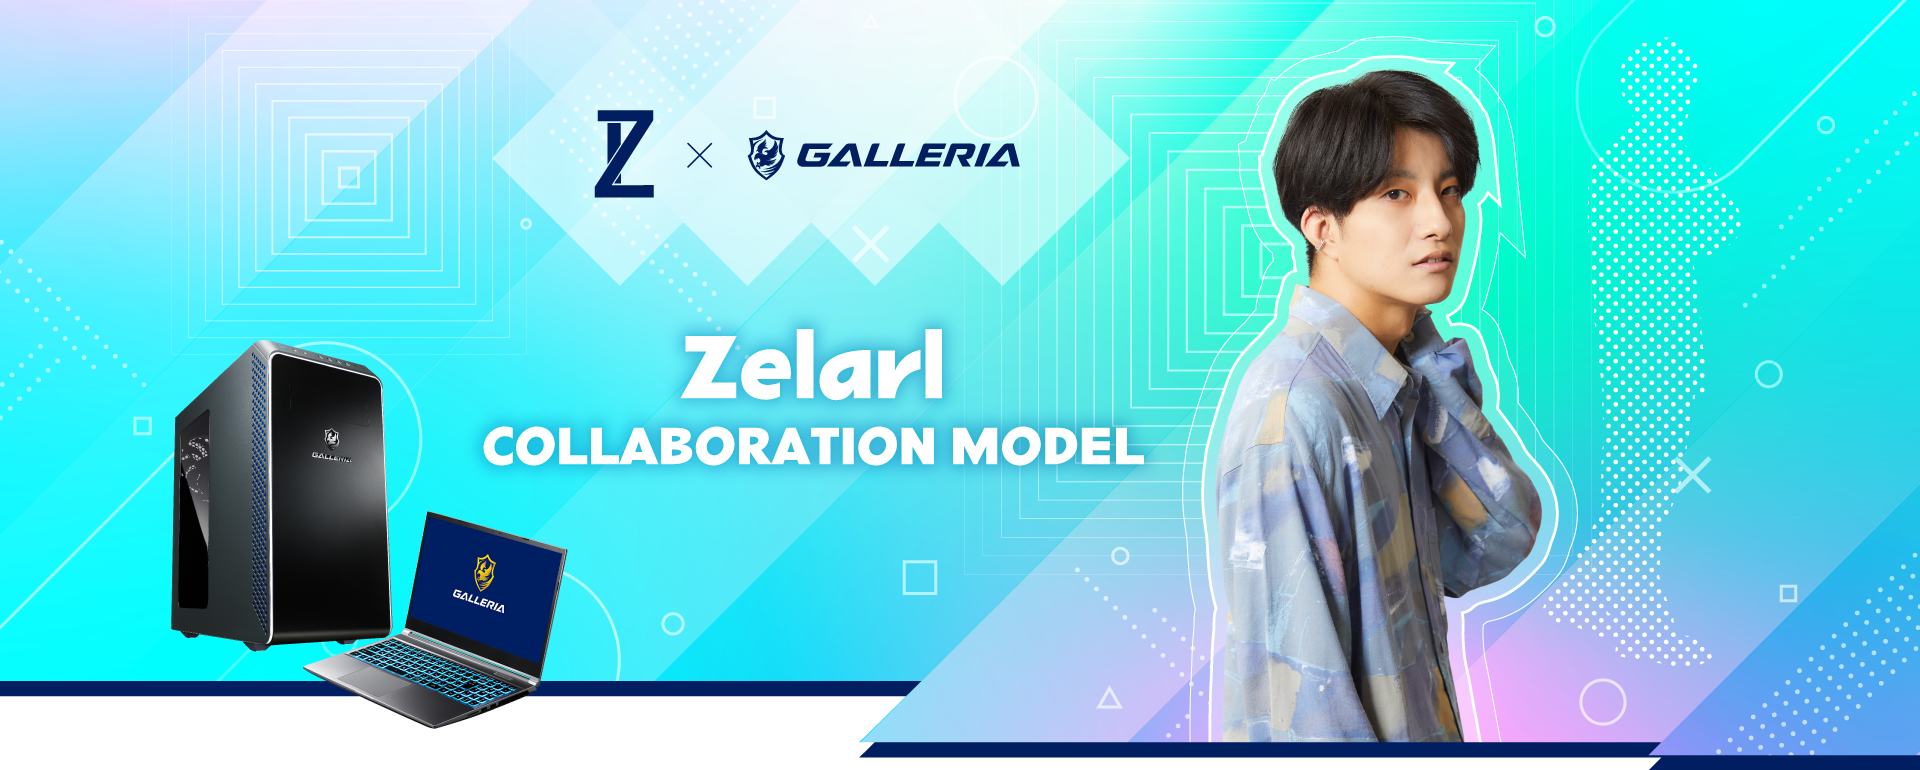 GALLERIA × Zelarl COLLABORATION MODEL